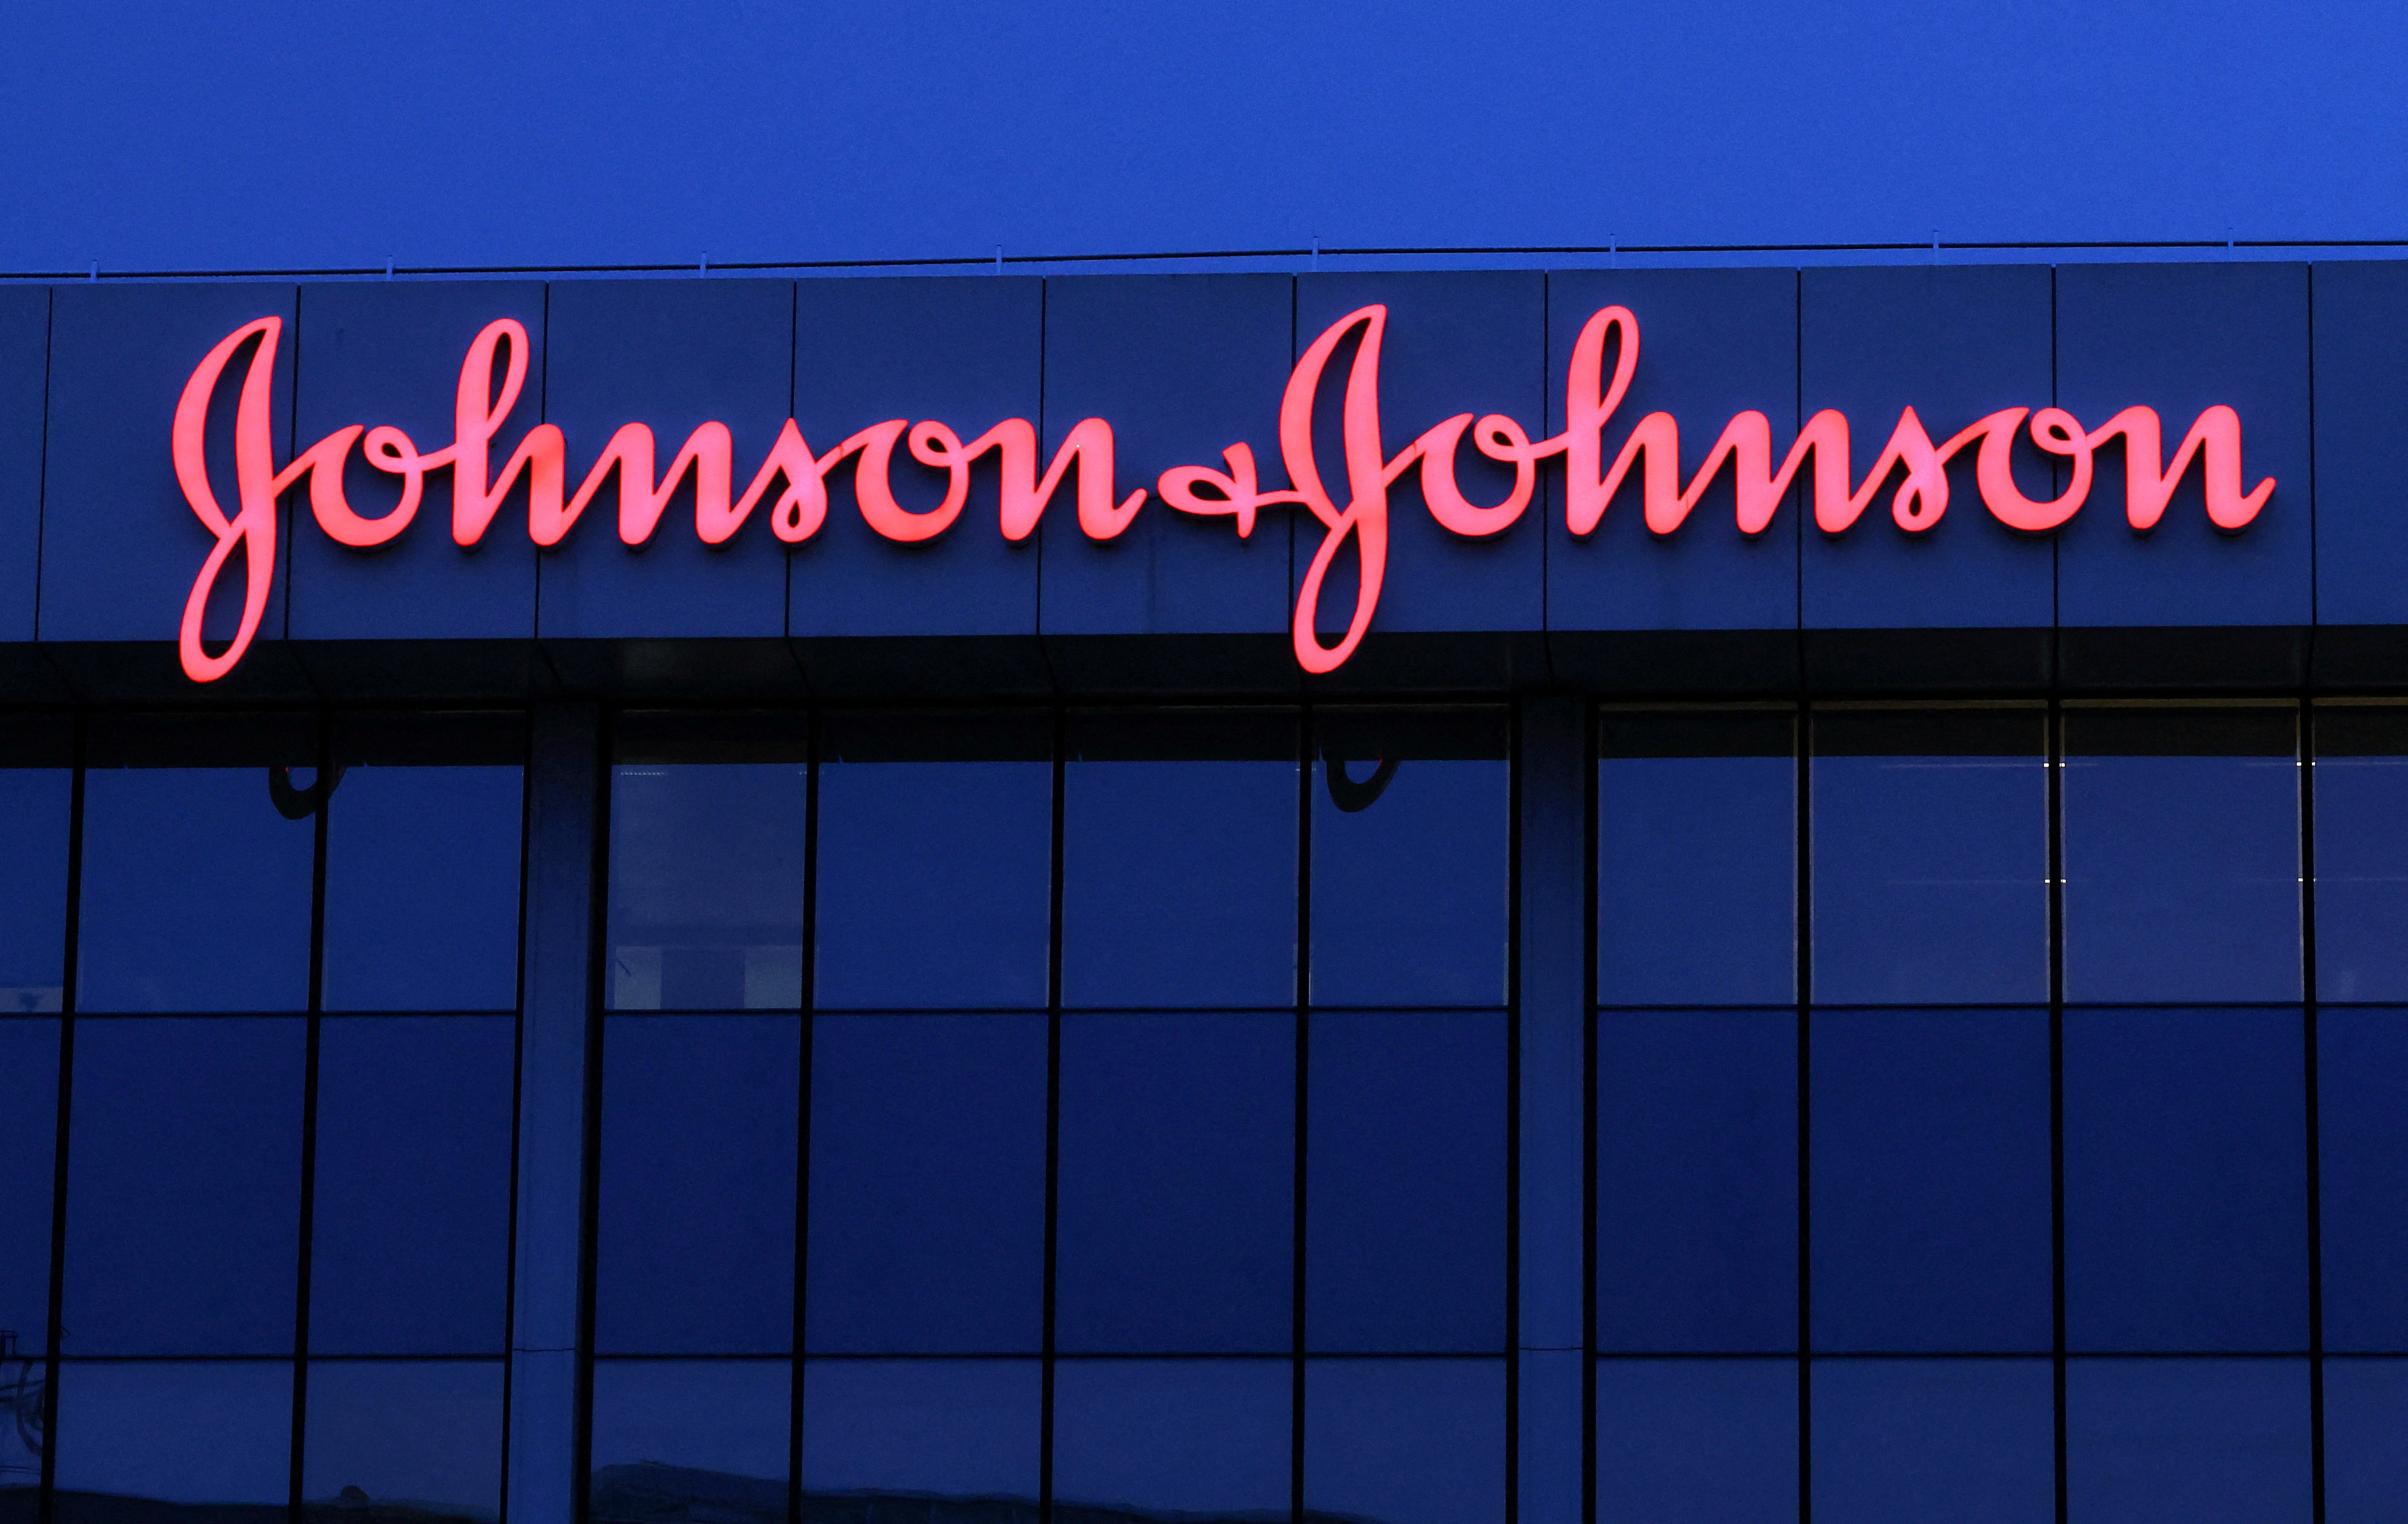 Johnson & Johnson Will Pay $700 Million To Resolve Baby Powder Marketing  Probe, Report Says